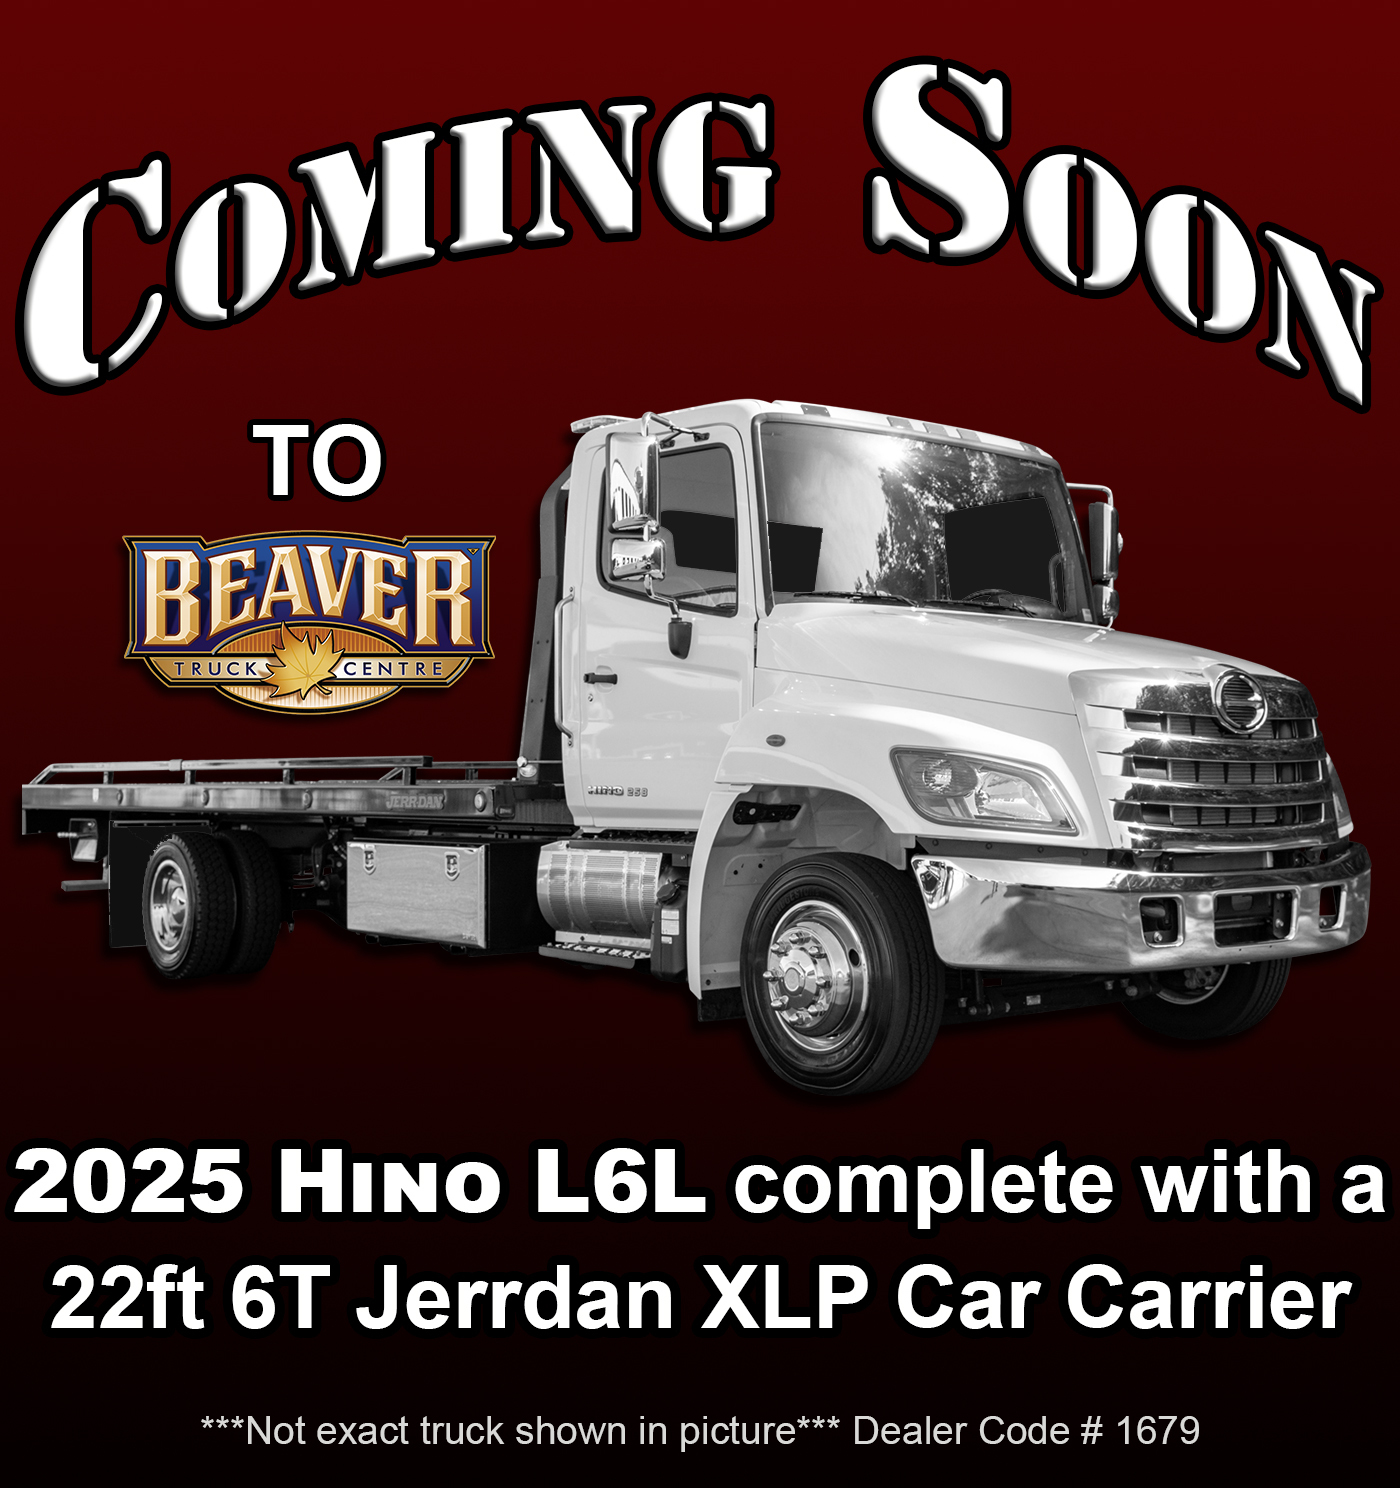 2025 Hino L6L Coming Soon!